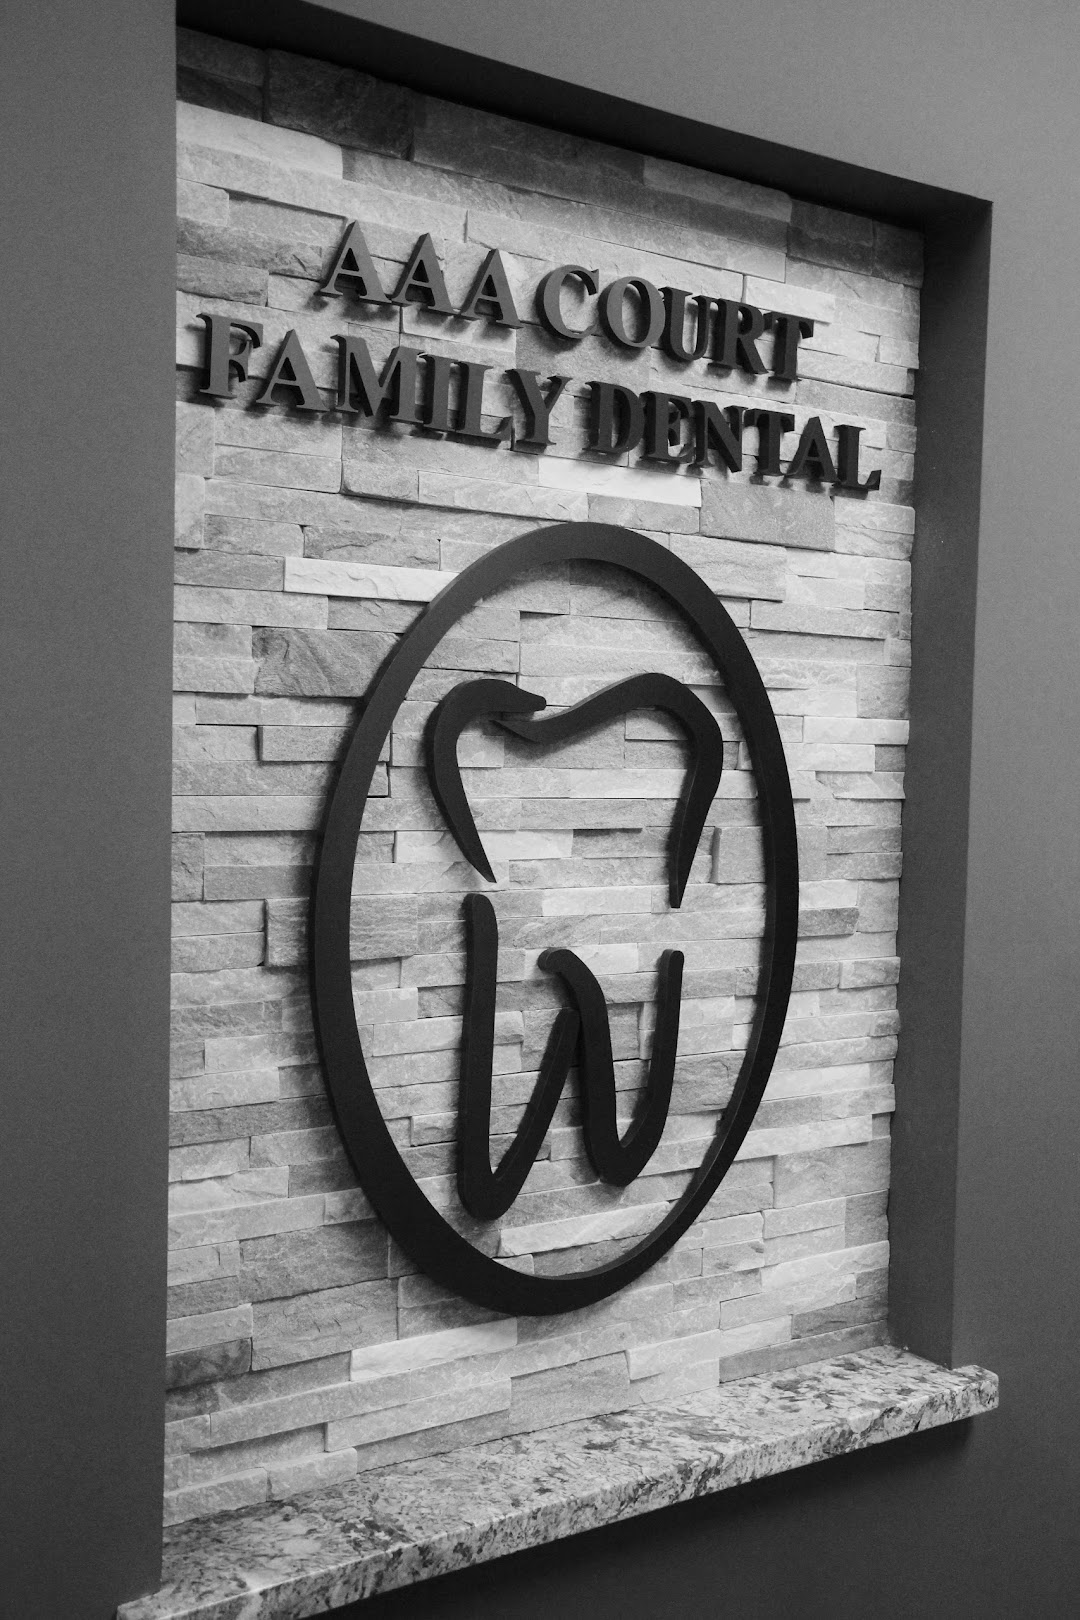 AAA Court Family Dental, Dr. Smith, Selden, Keech